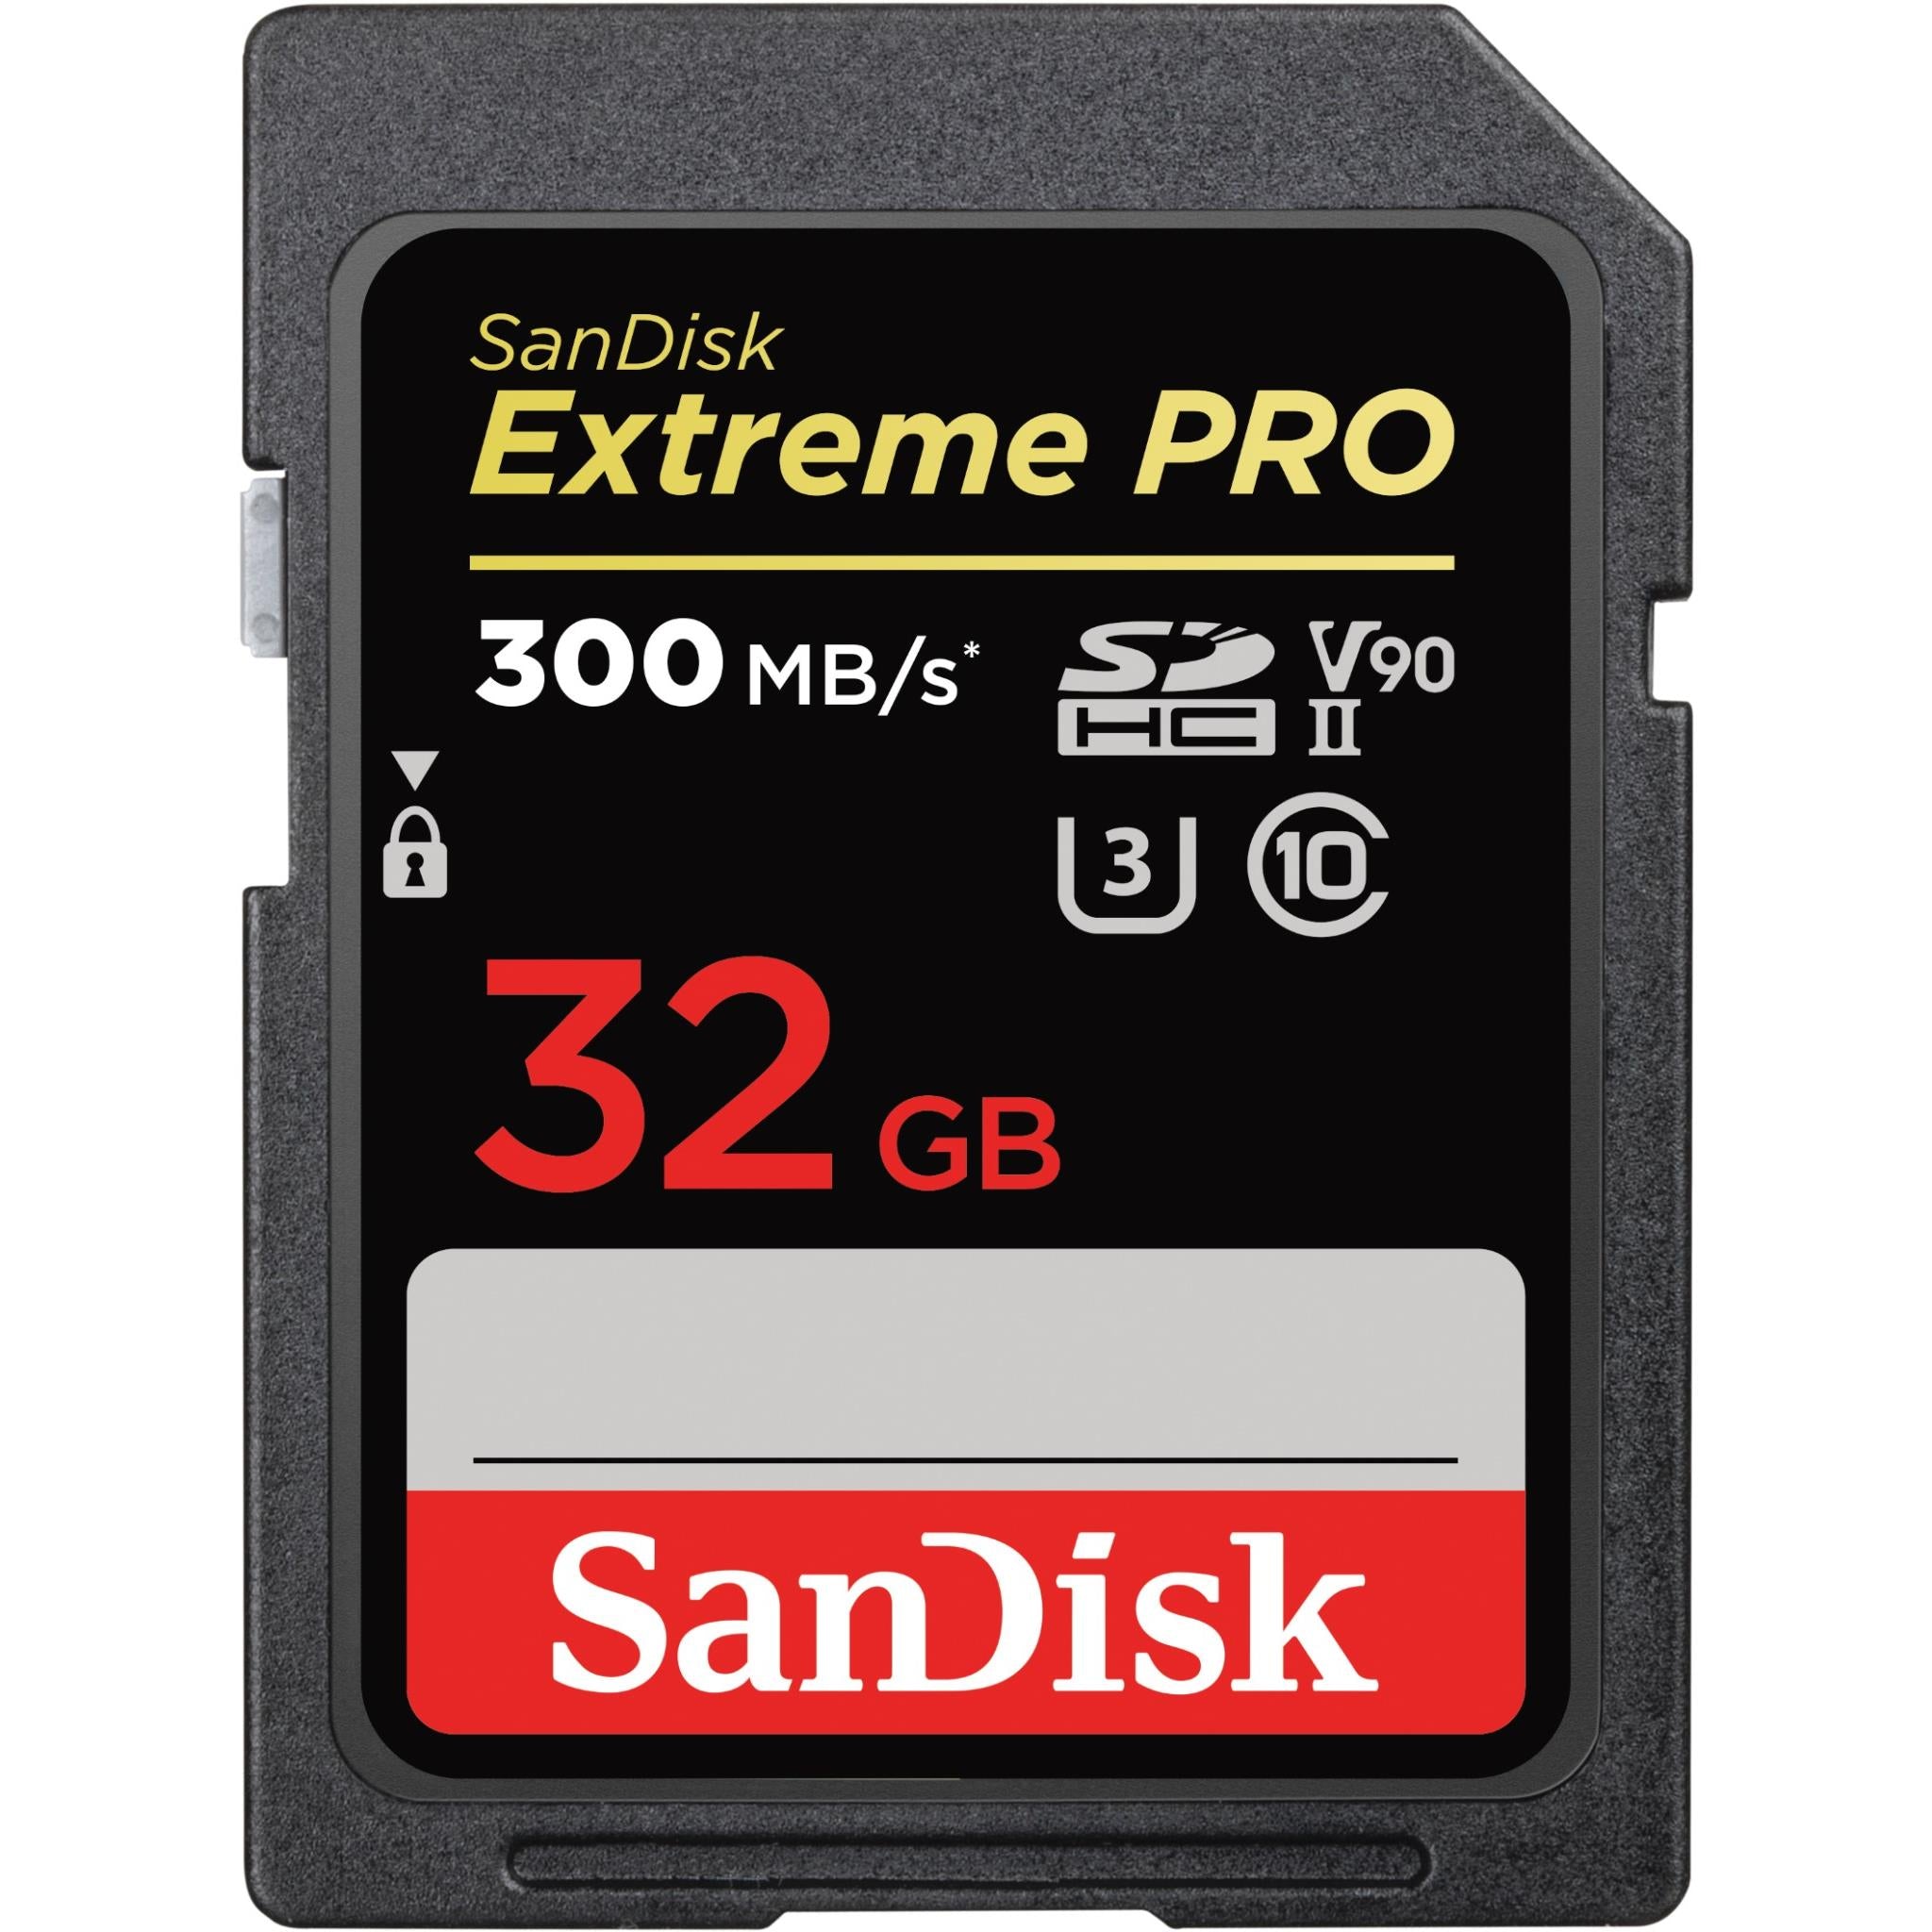 sandisk extreme pro 32gb sdhc memory card [2021]